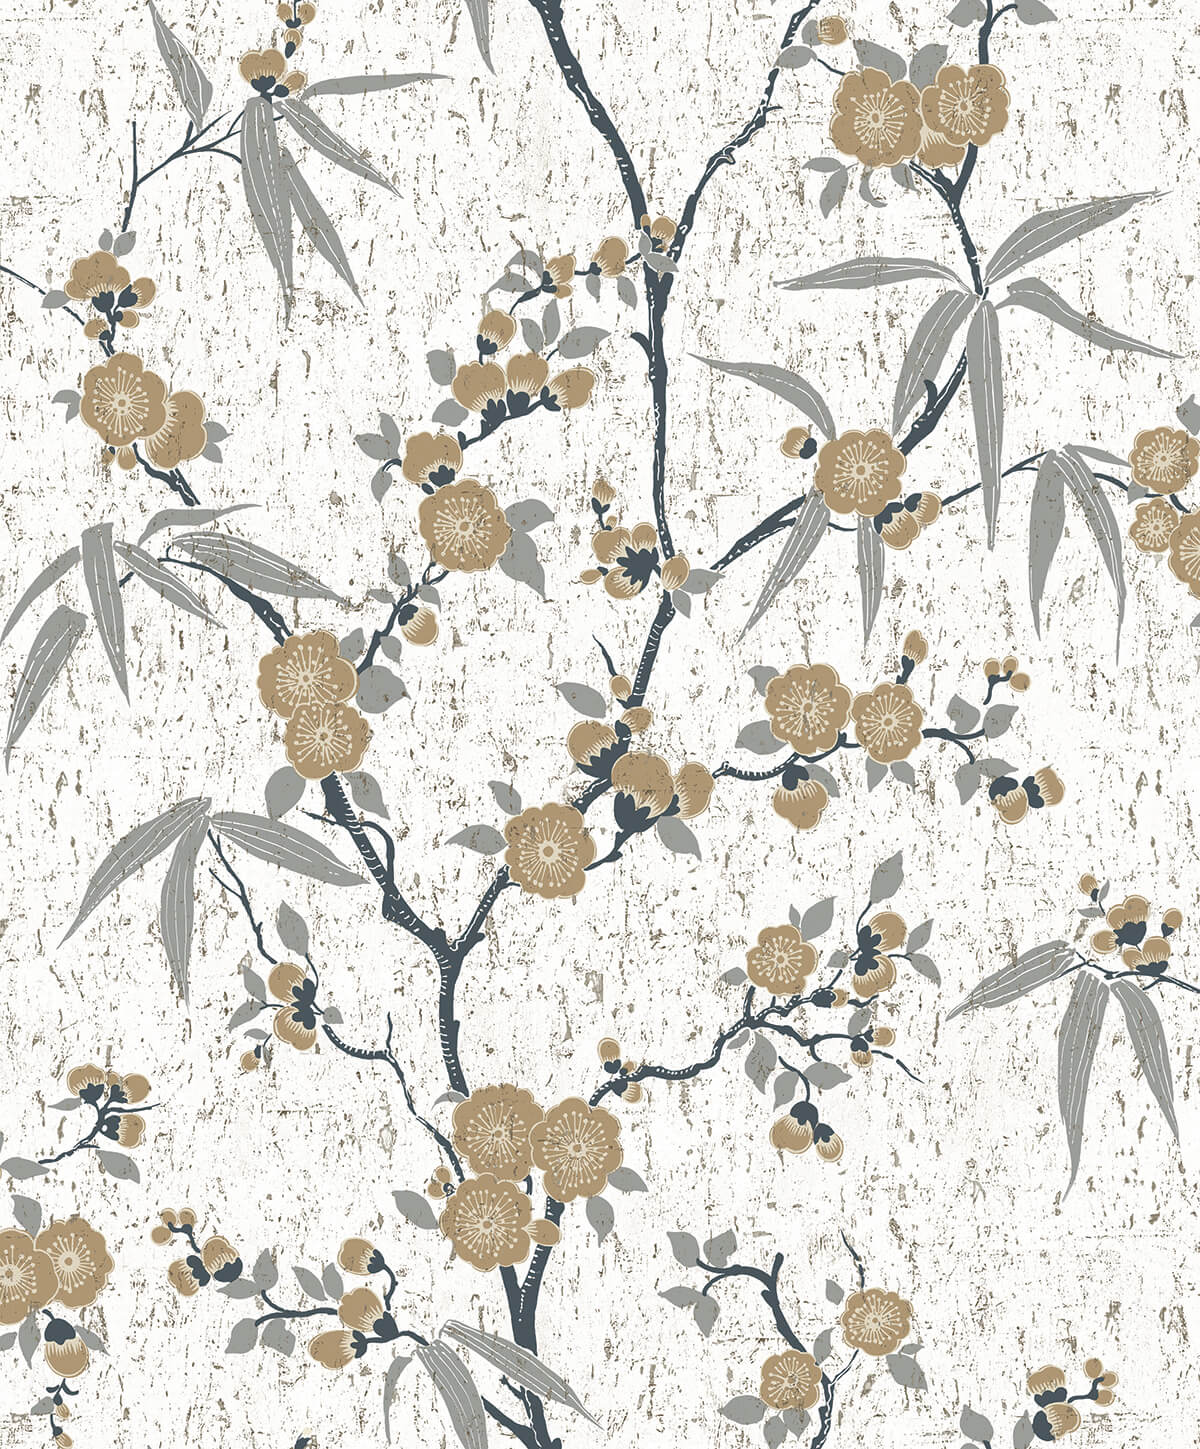 White Heron Blossom Cork Wallpaper - Gold Chip